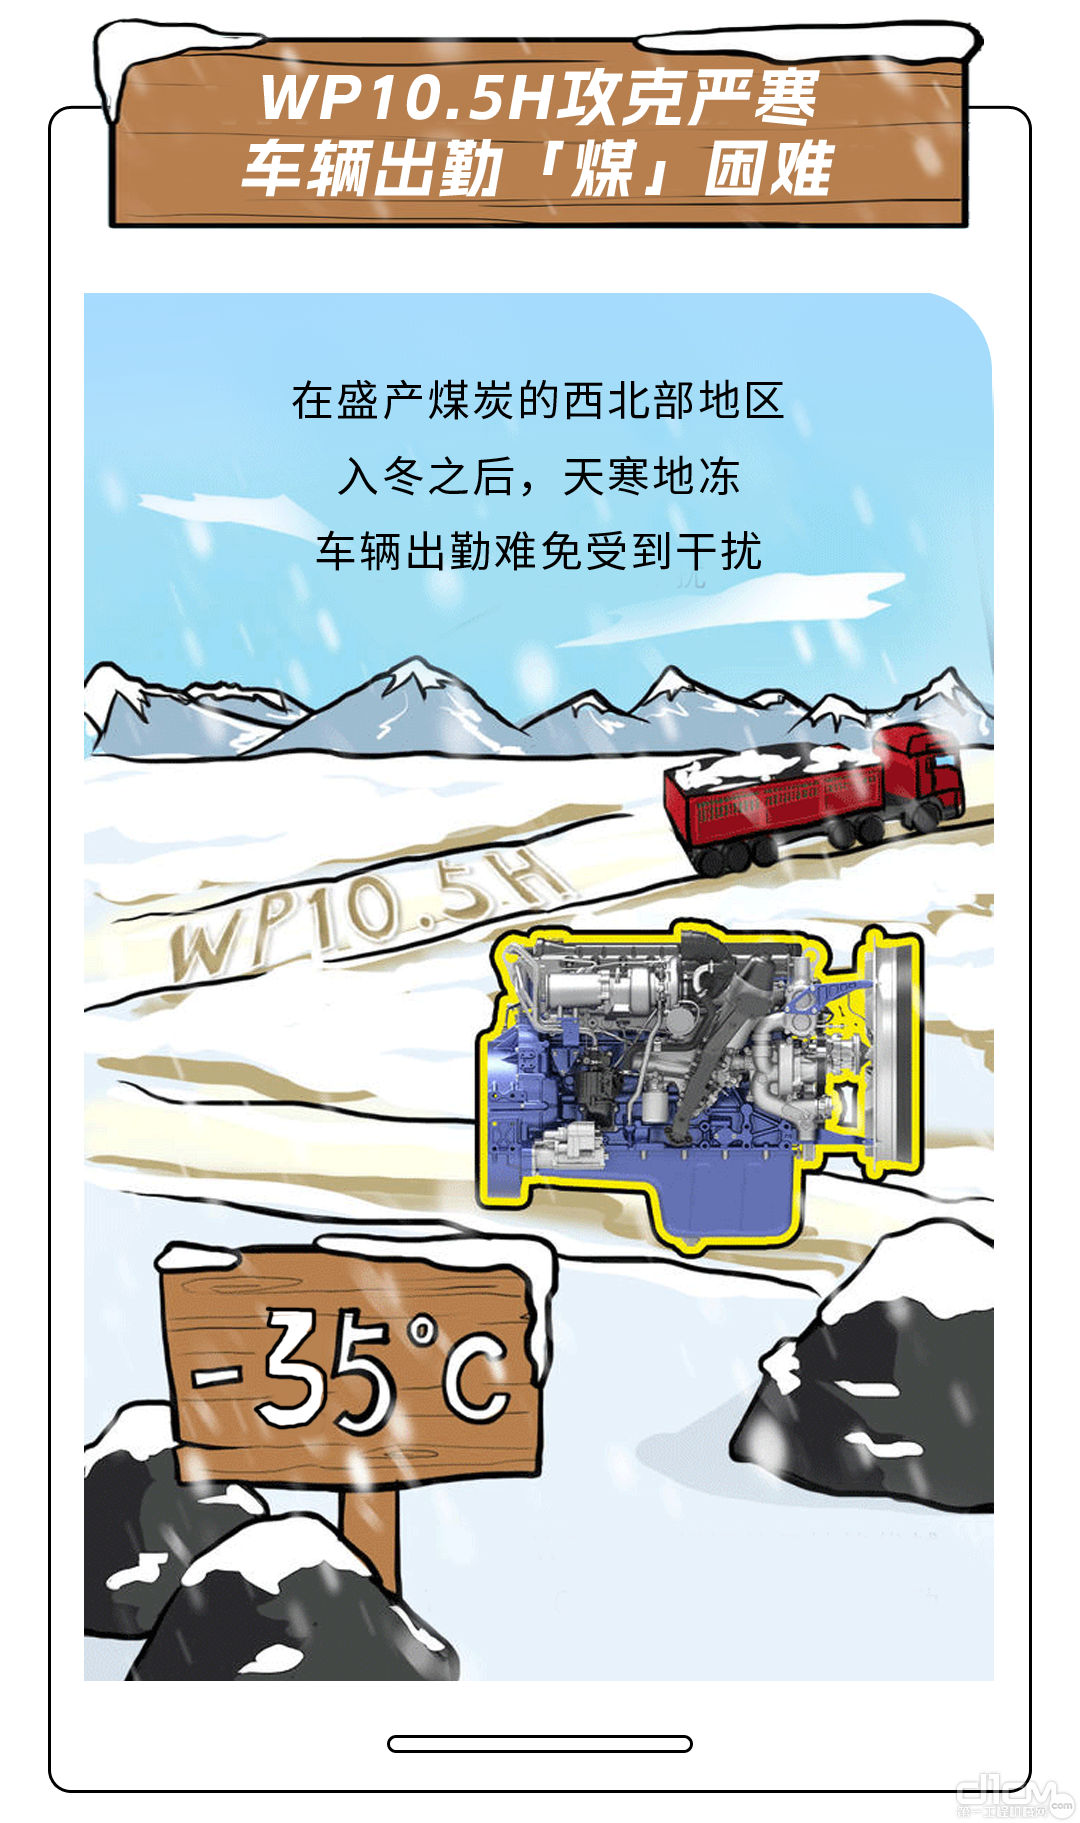 WP10.5H发动机低温适应性强，在-35℃极寒环境下一次启动成功